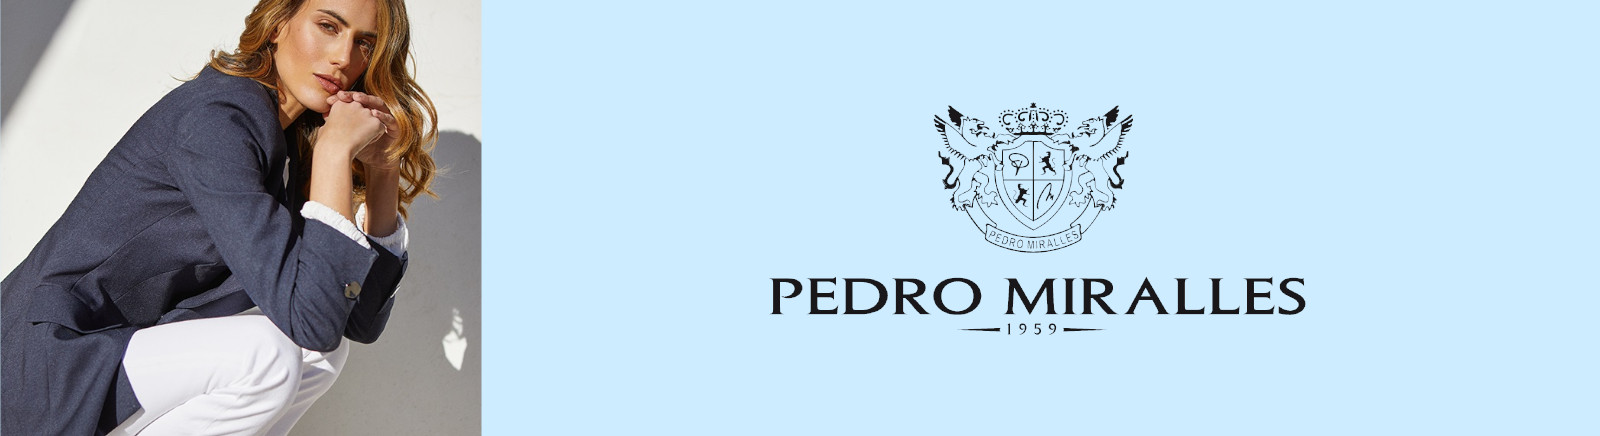 Pedro Miralles Damenschuhe online bestellen im Prange Schuhe Shop